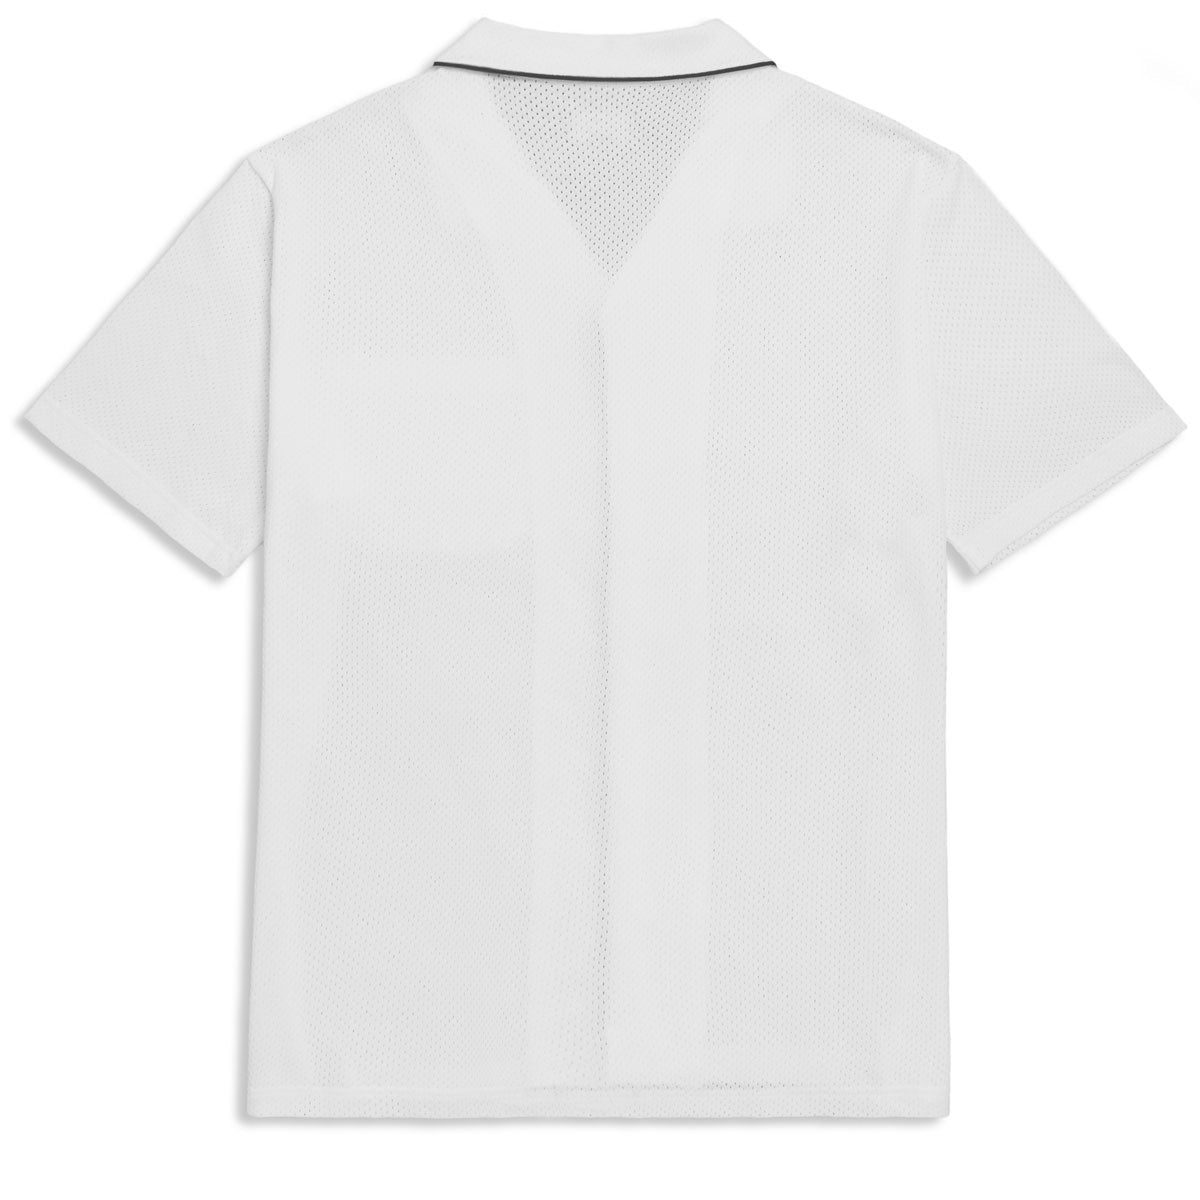 CCS Lounge Mesh Shirt - White image 5